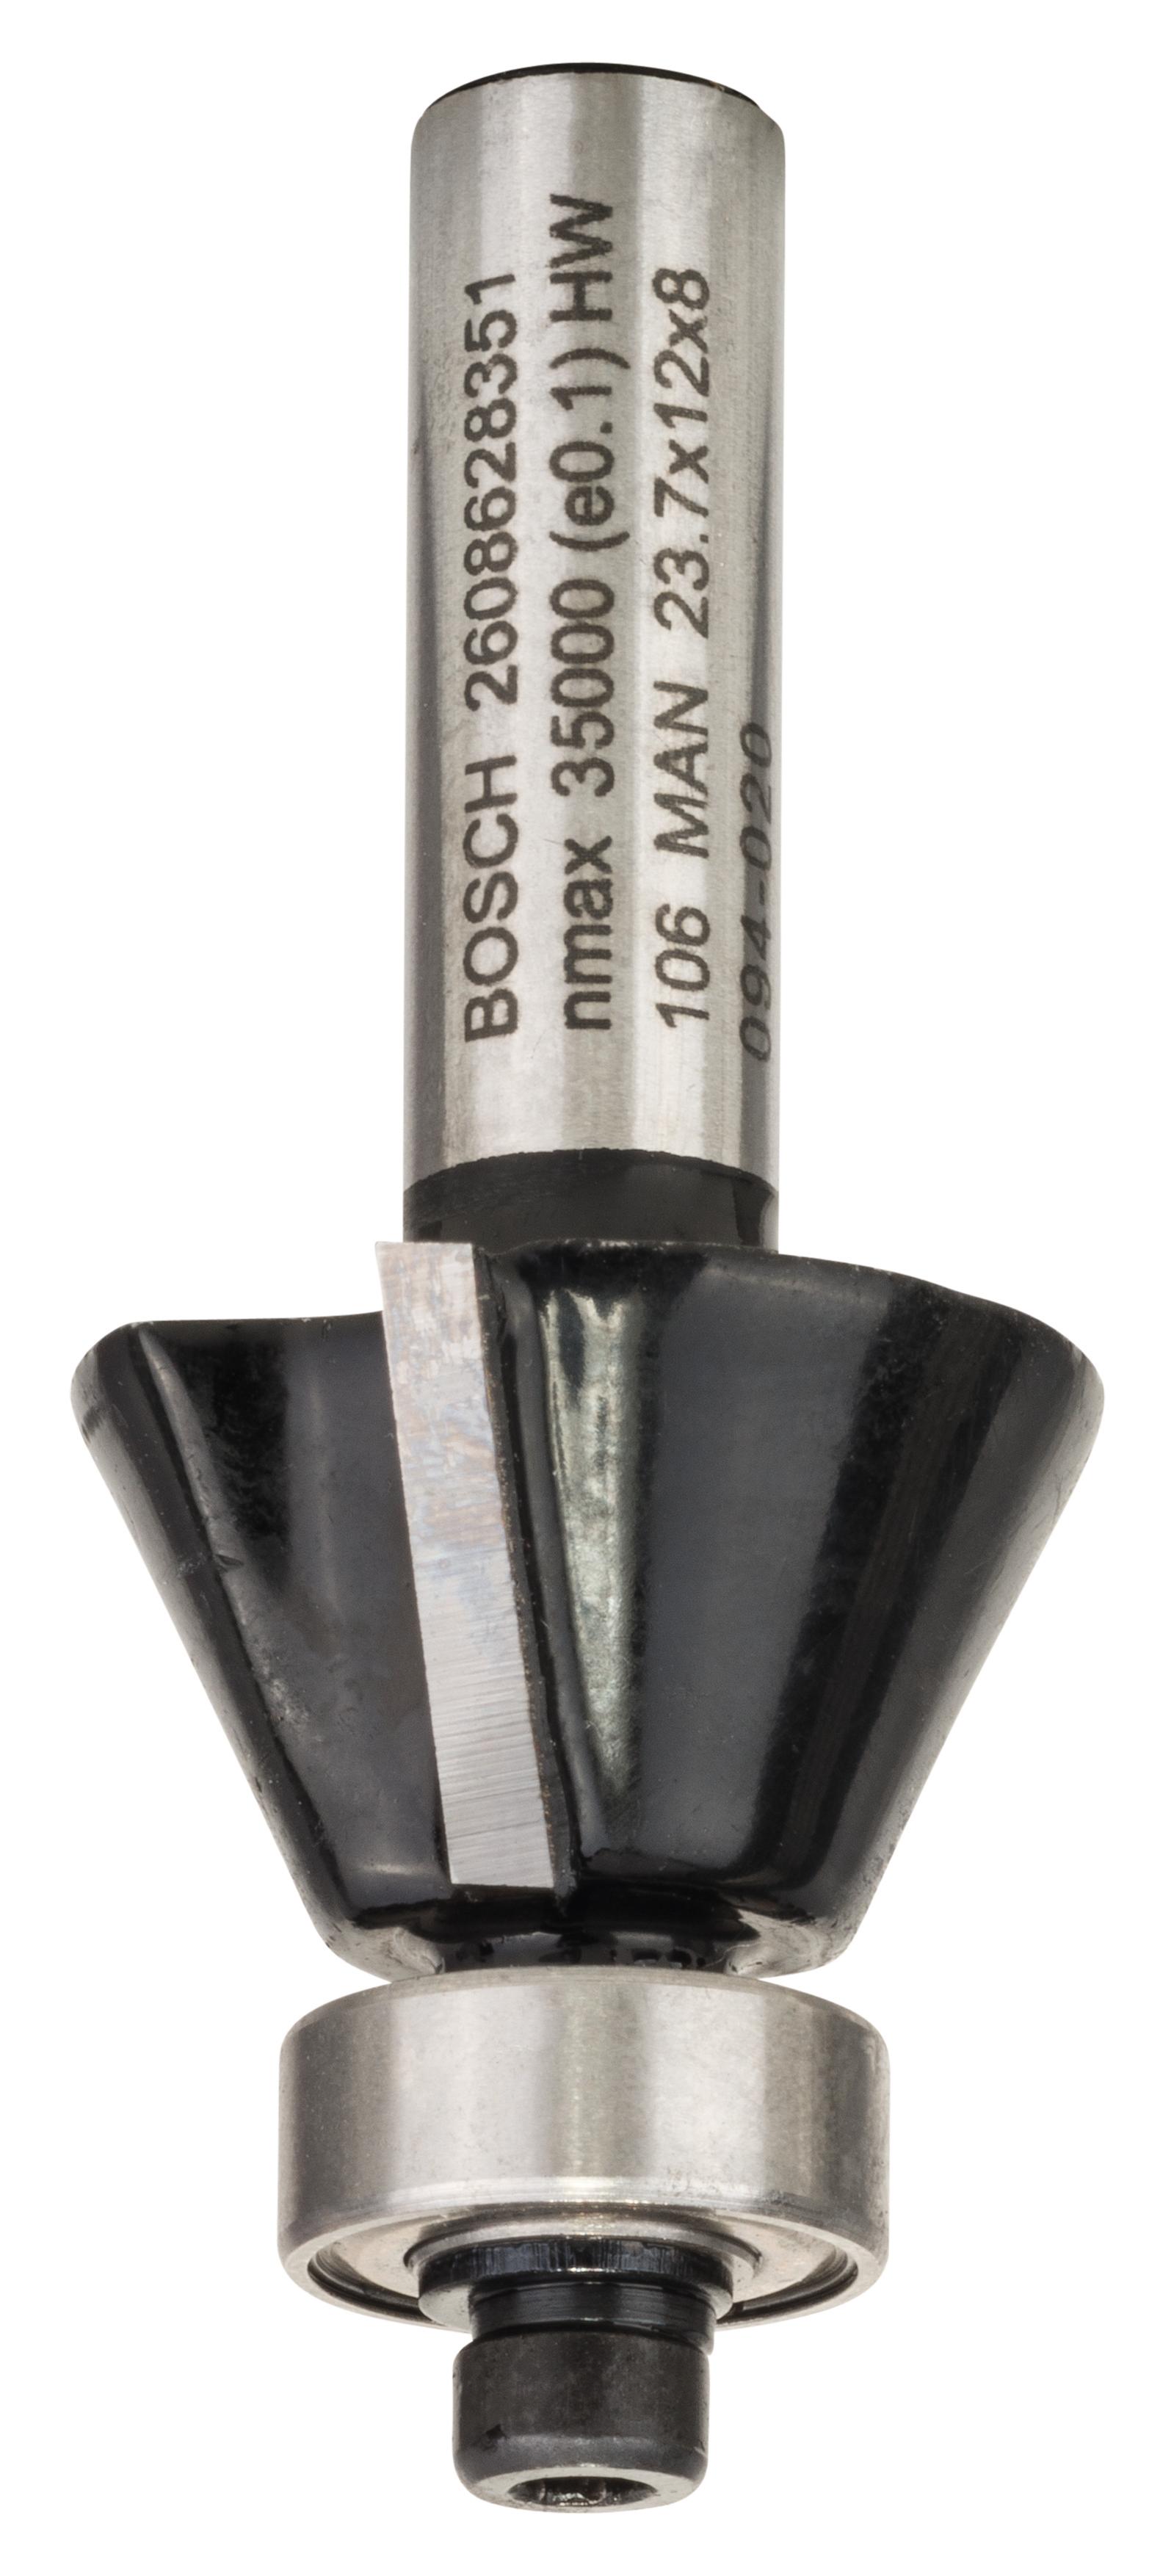 Selected image for Bosch Glodalo za skošavanje ivica / glodalo za glodanje uz površinu 2608628351, 8 mm, D1 23,7 mm, B 5,5 mm, L 12 mm, G 54 mm, 25°